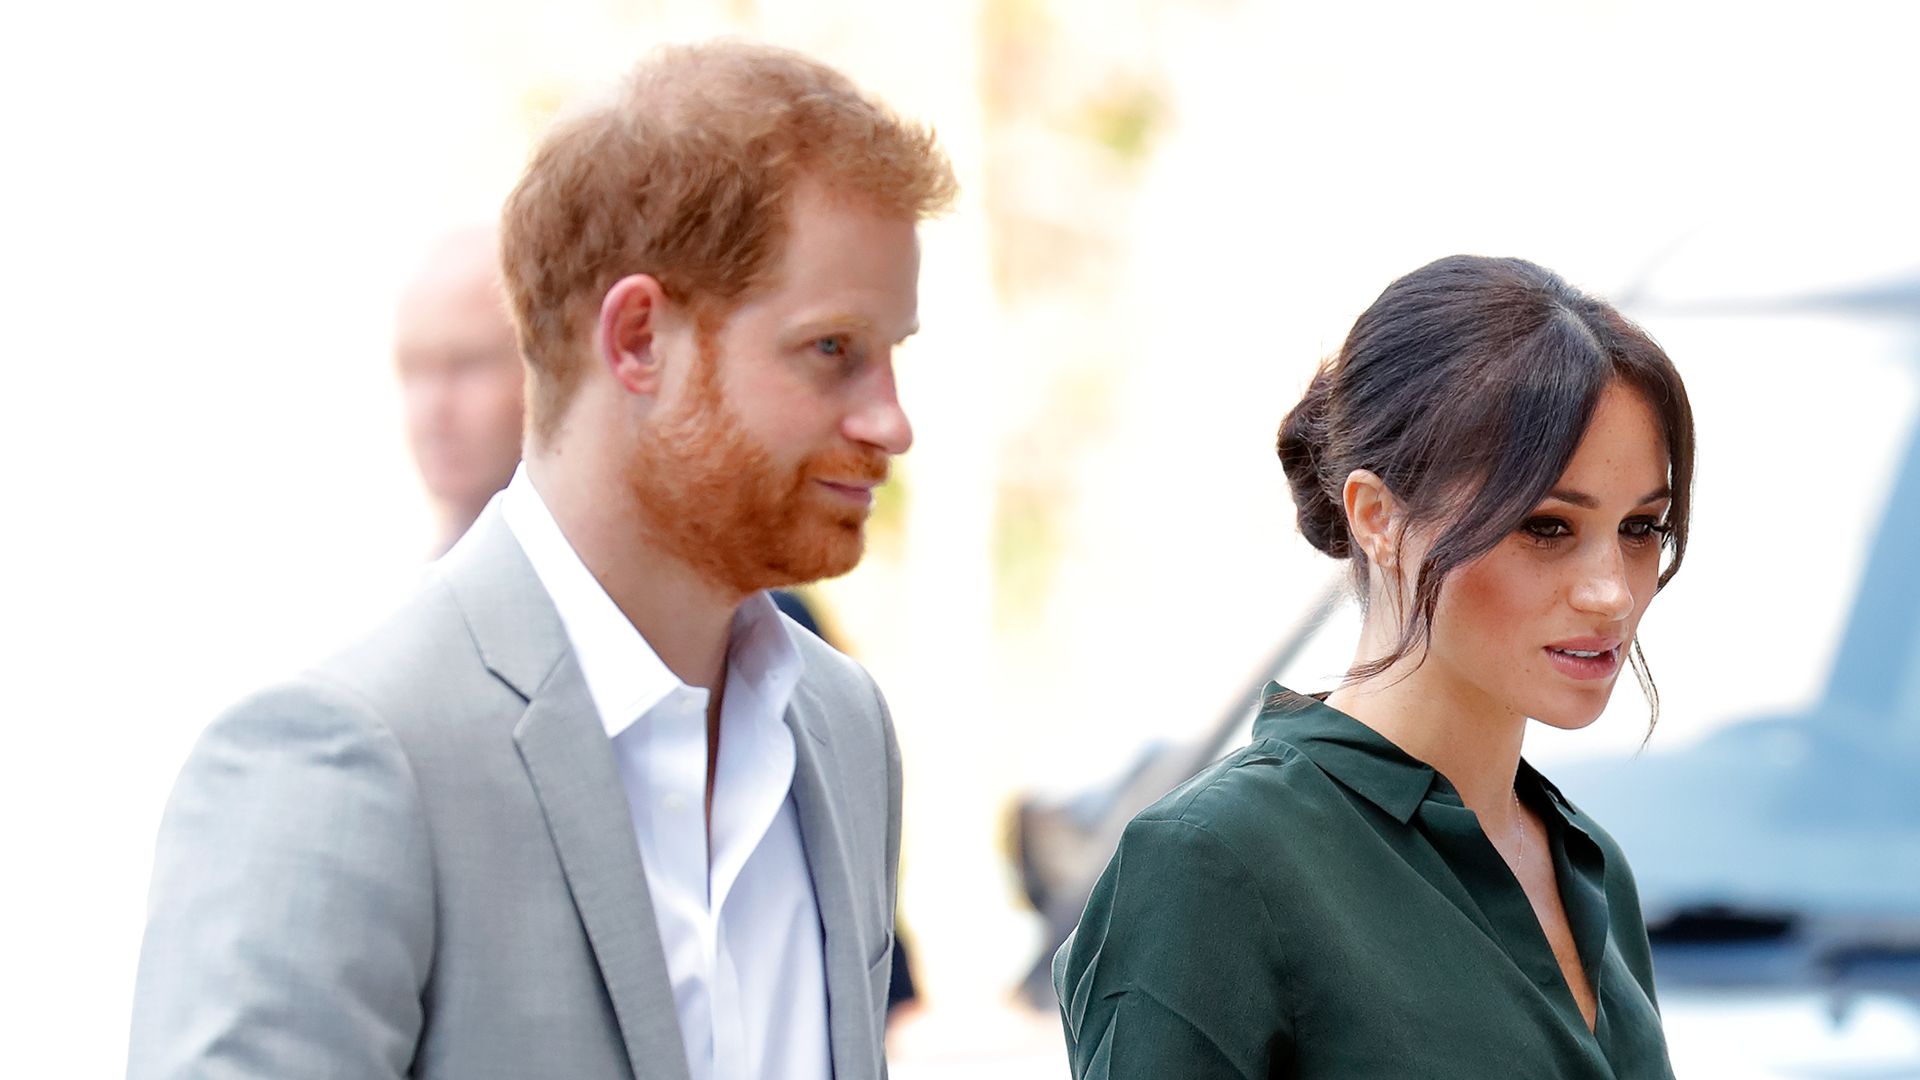 Prince Harry and Meghan Markle's newlywed woes on honeymoon